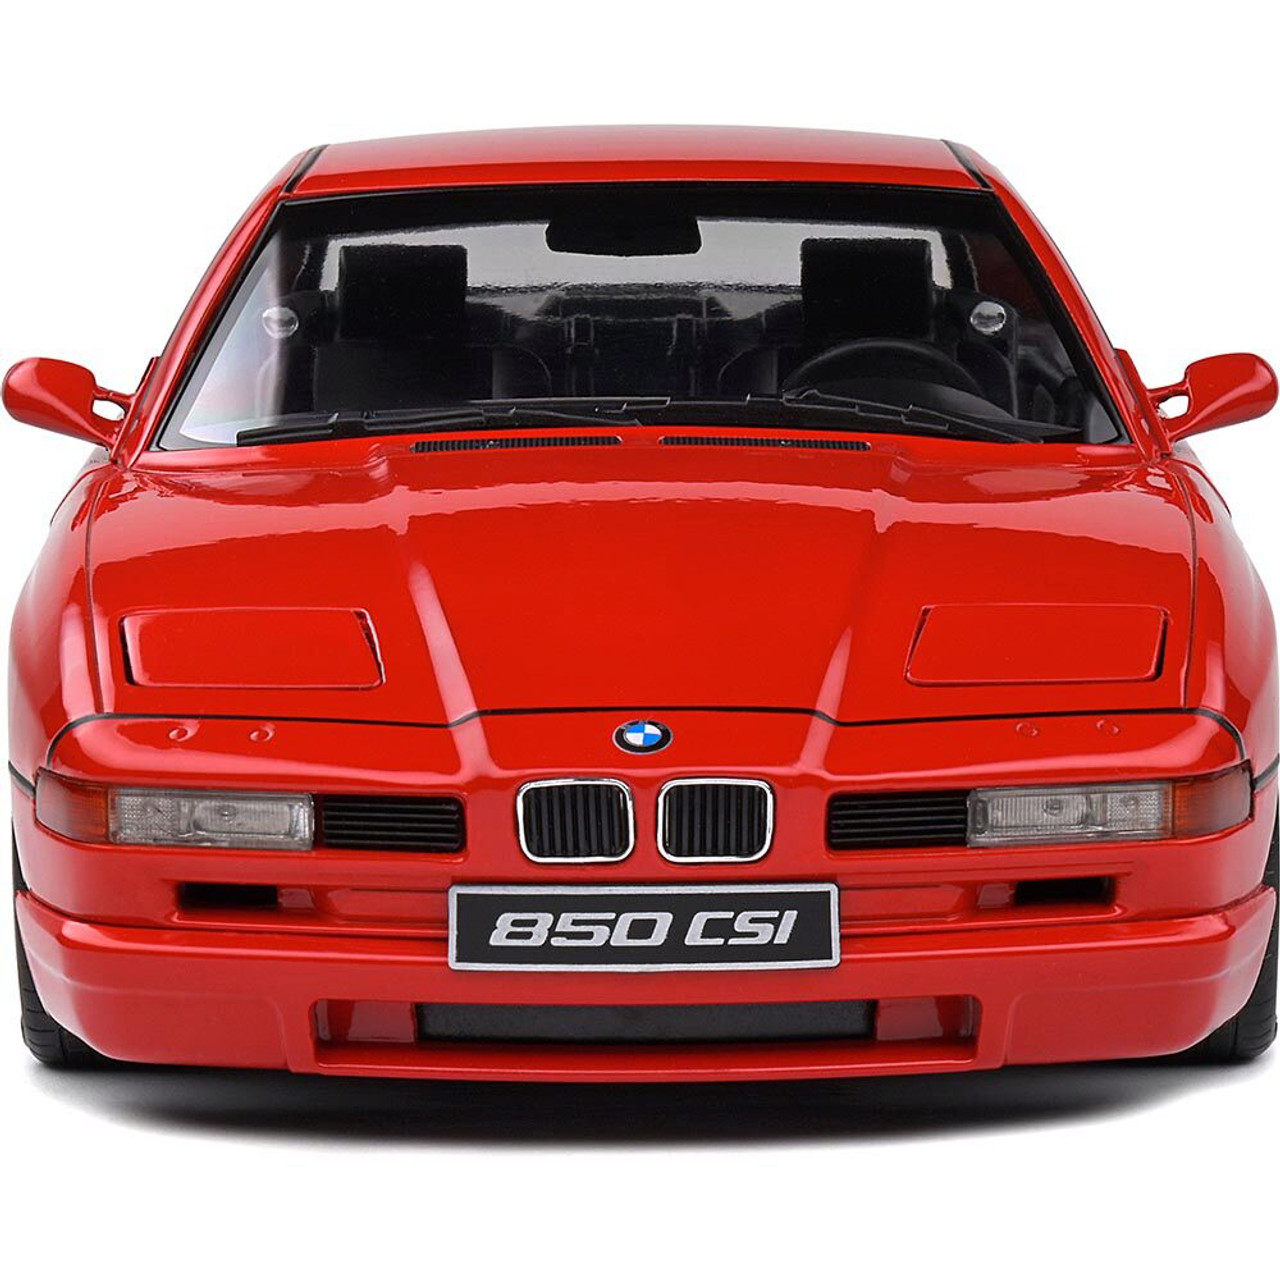 Solido 1:18 1990 BMW 850 (E31) CSI - Blue - M & J Toys Inc. Die-Cast  Distribution